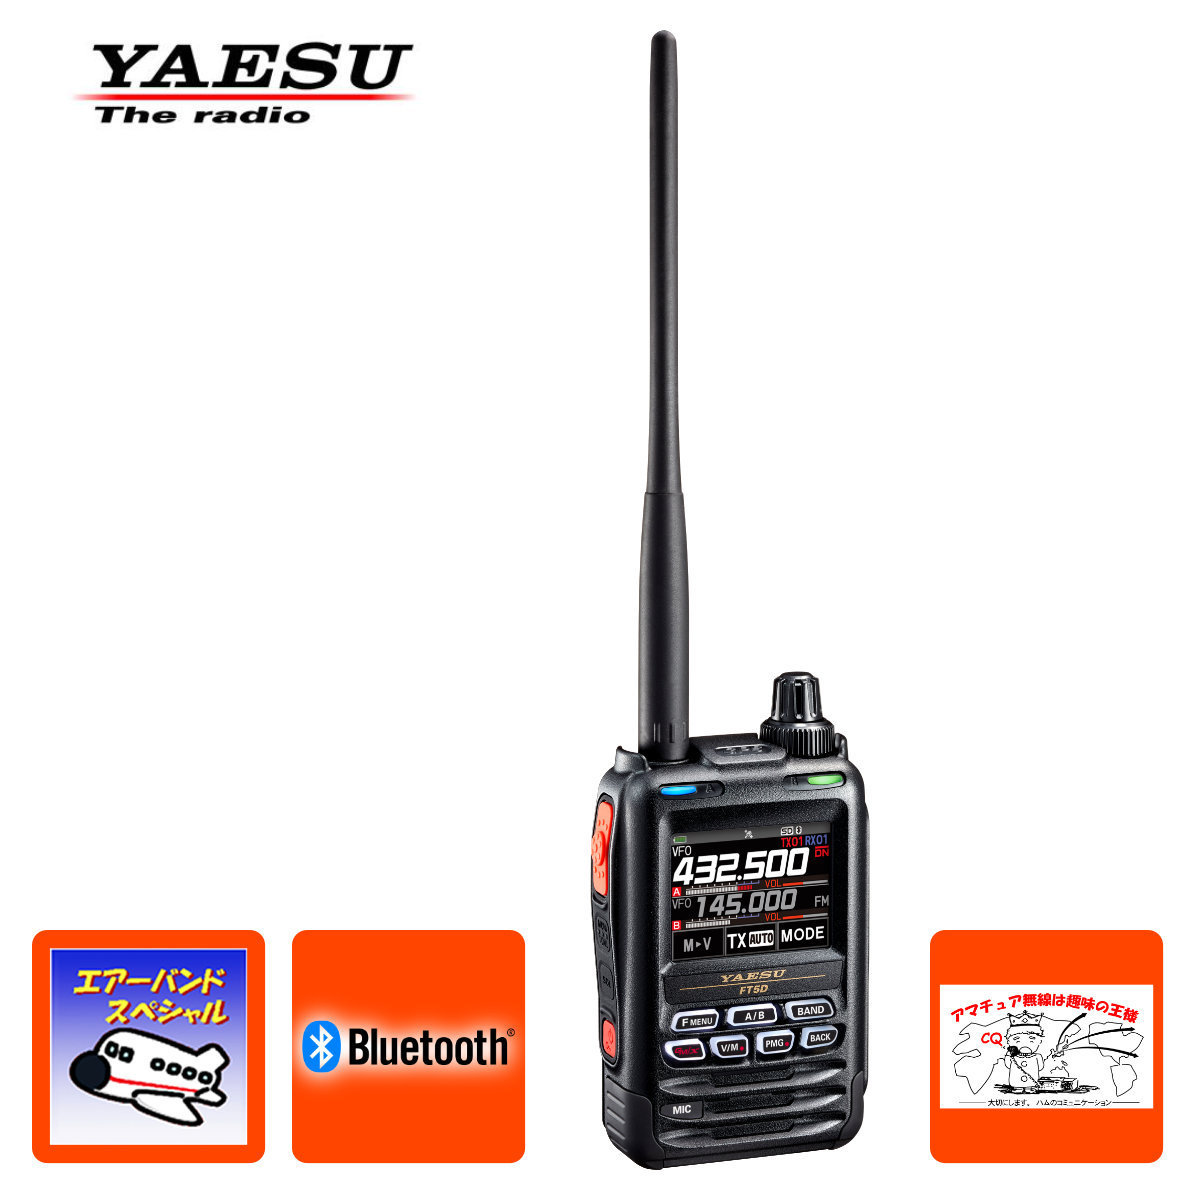  amateur radio FT5De urban do special Yaesu wireless C4FM/FM 144/430MHz dual band digital transceiver output 5W